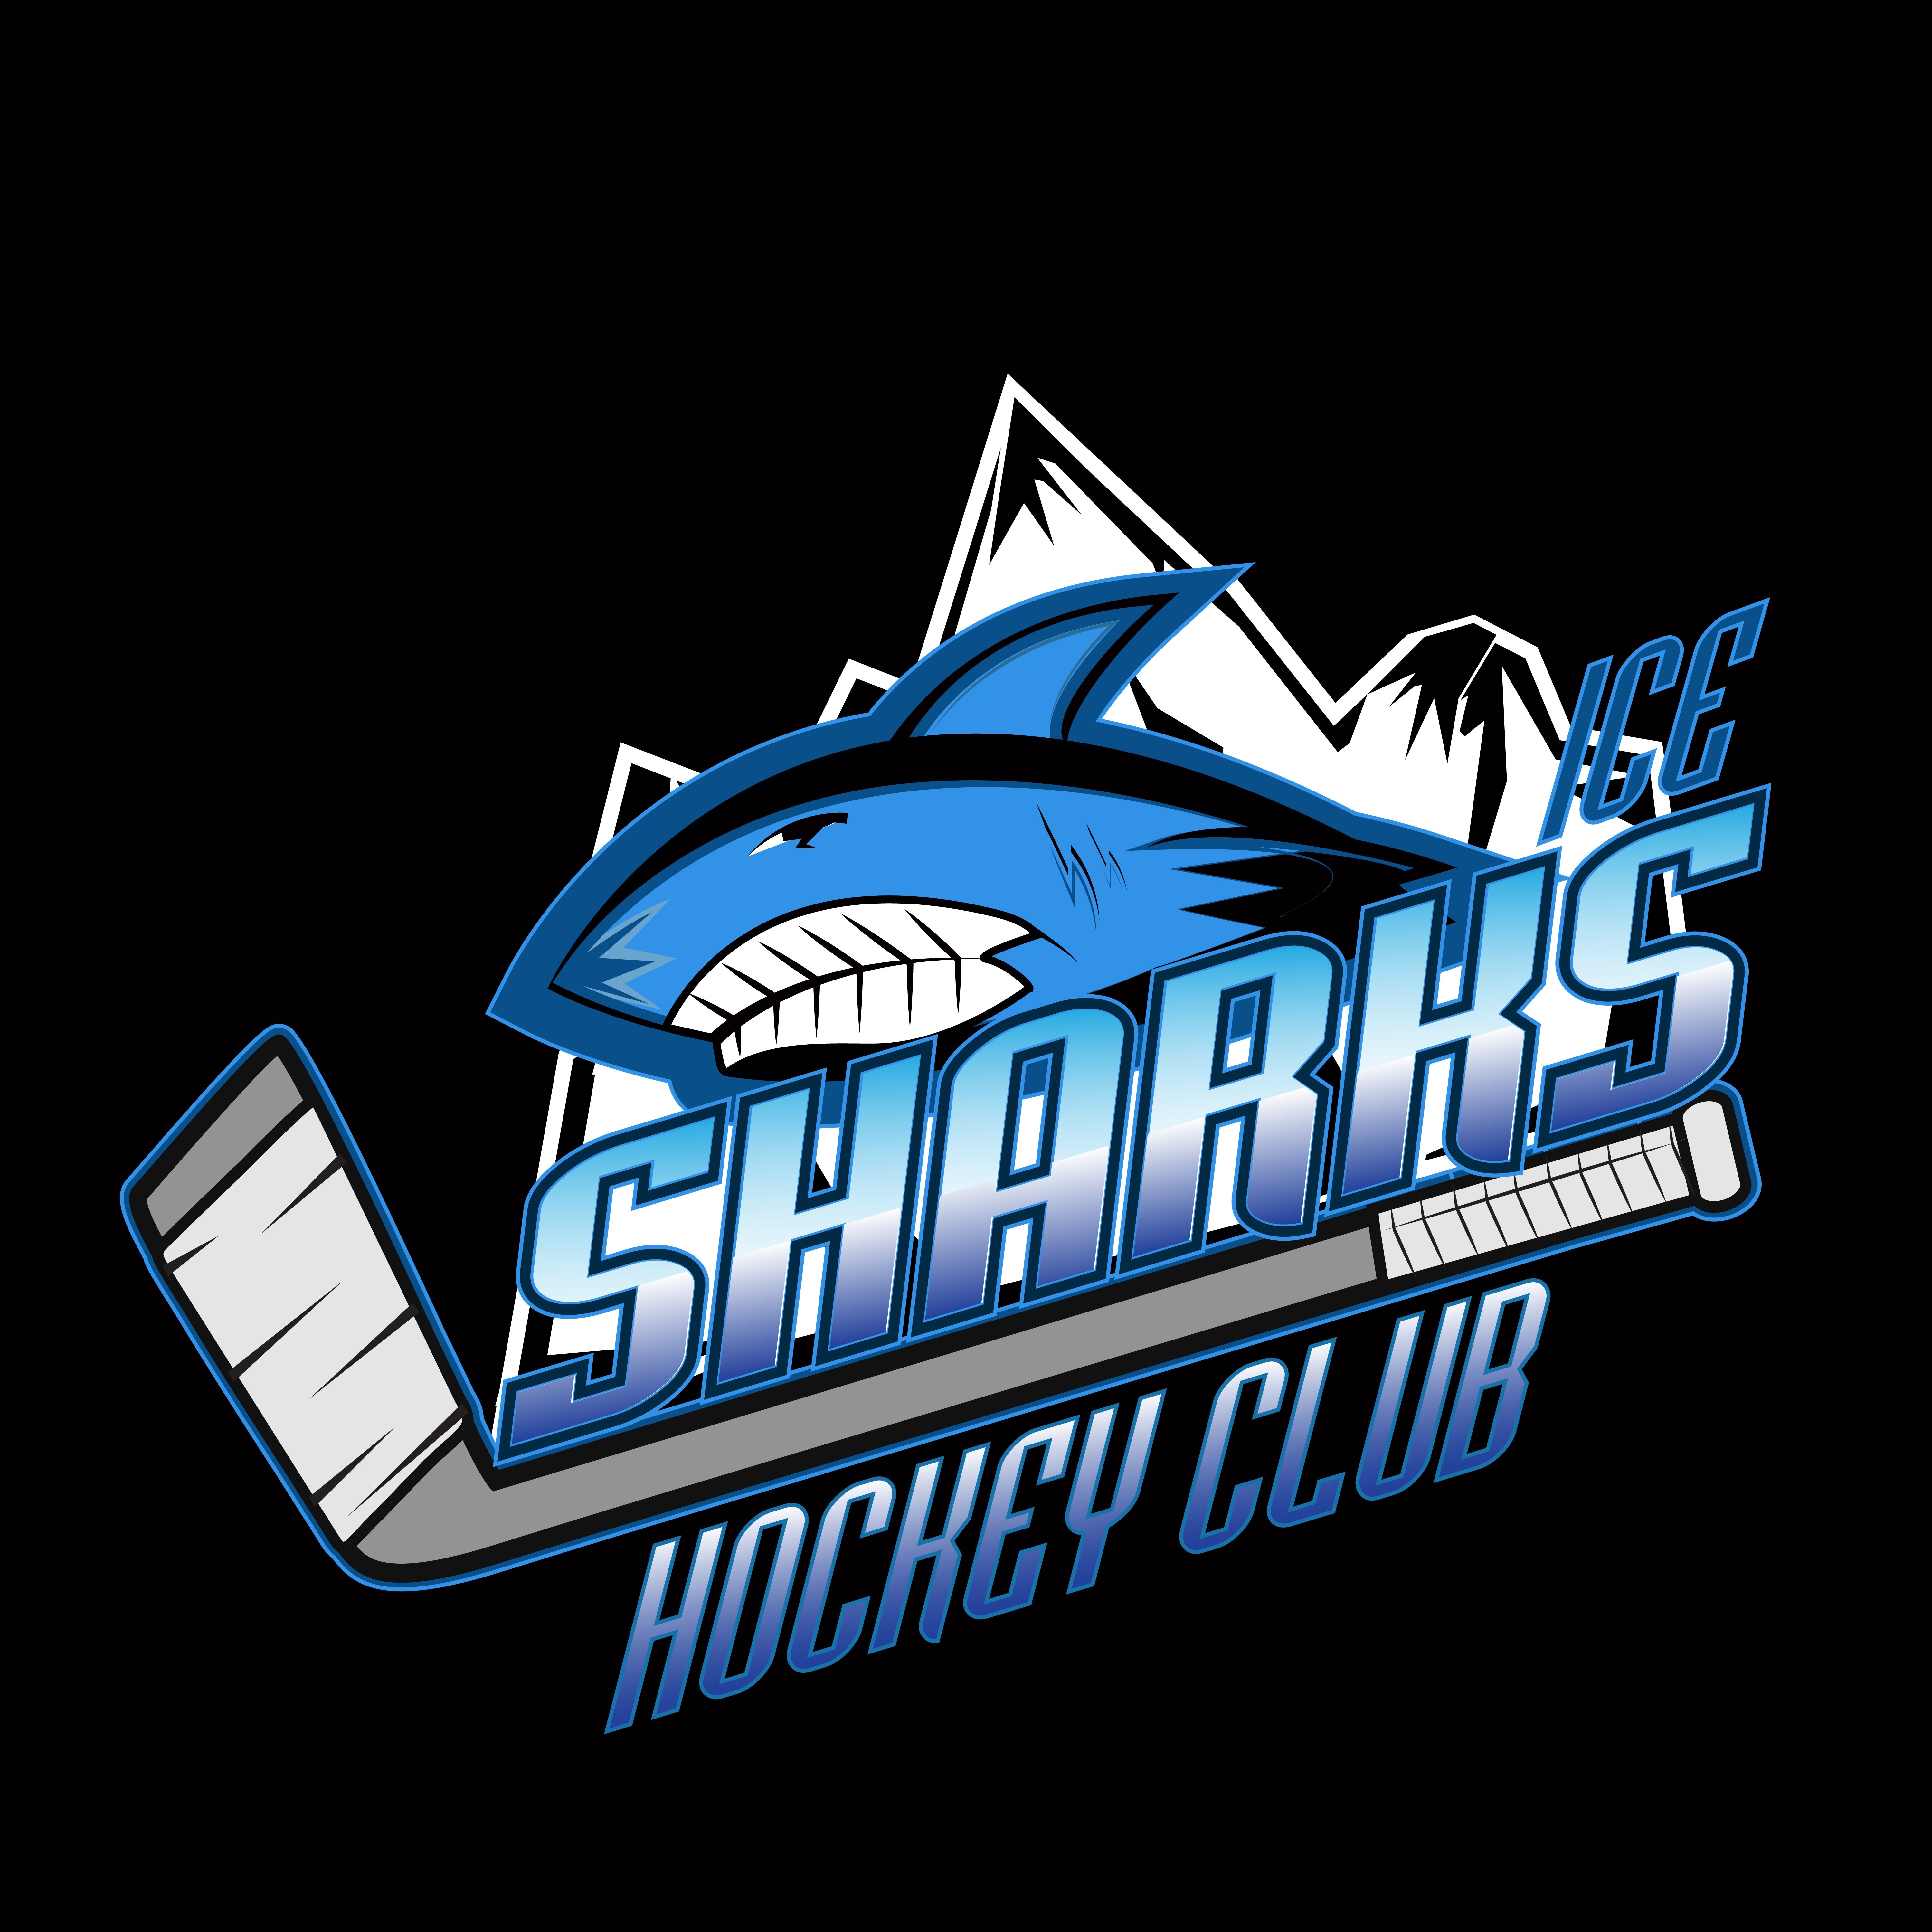 Sharks hockey club professional logo preview image.